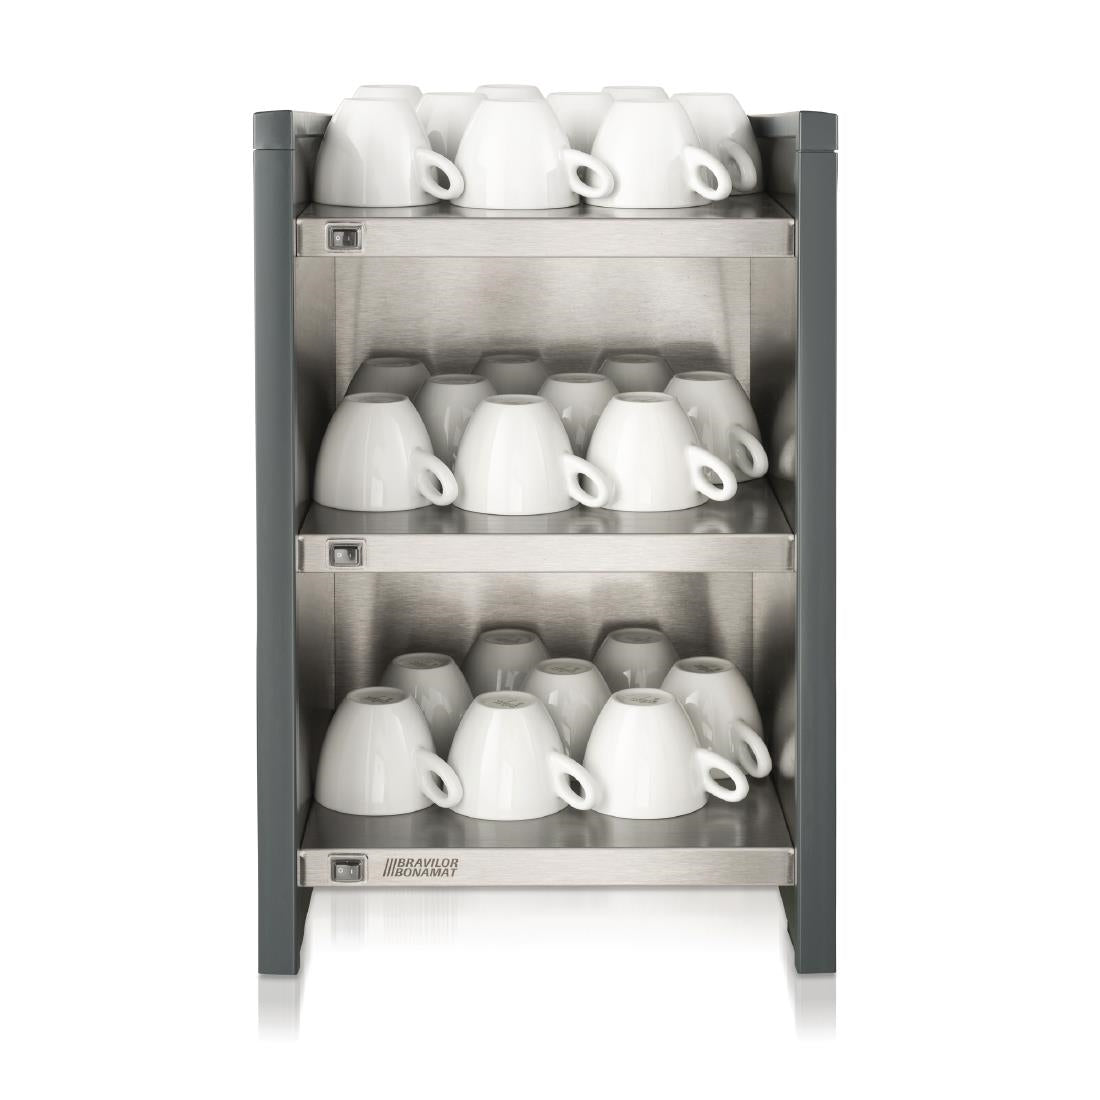 Bravilor 3 Shelf Cup Warmer WHK JD Catering Equipment Solutions Ltd